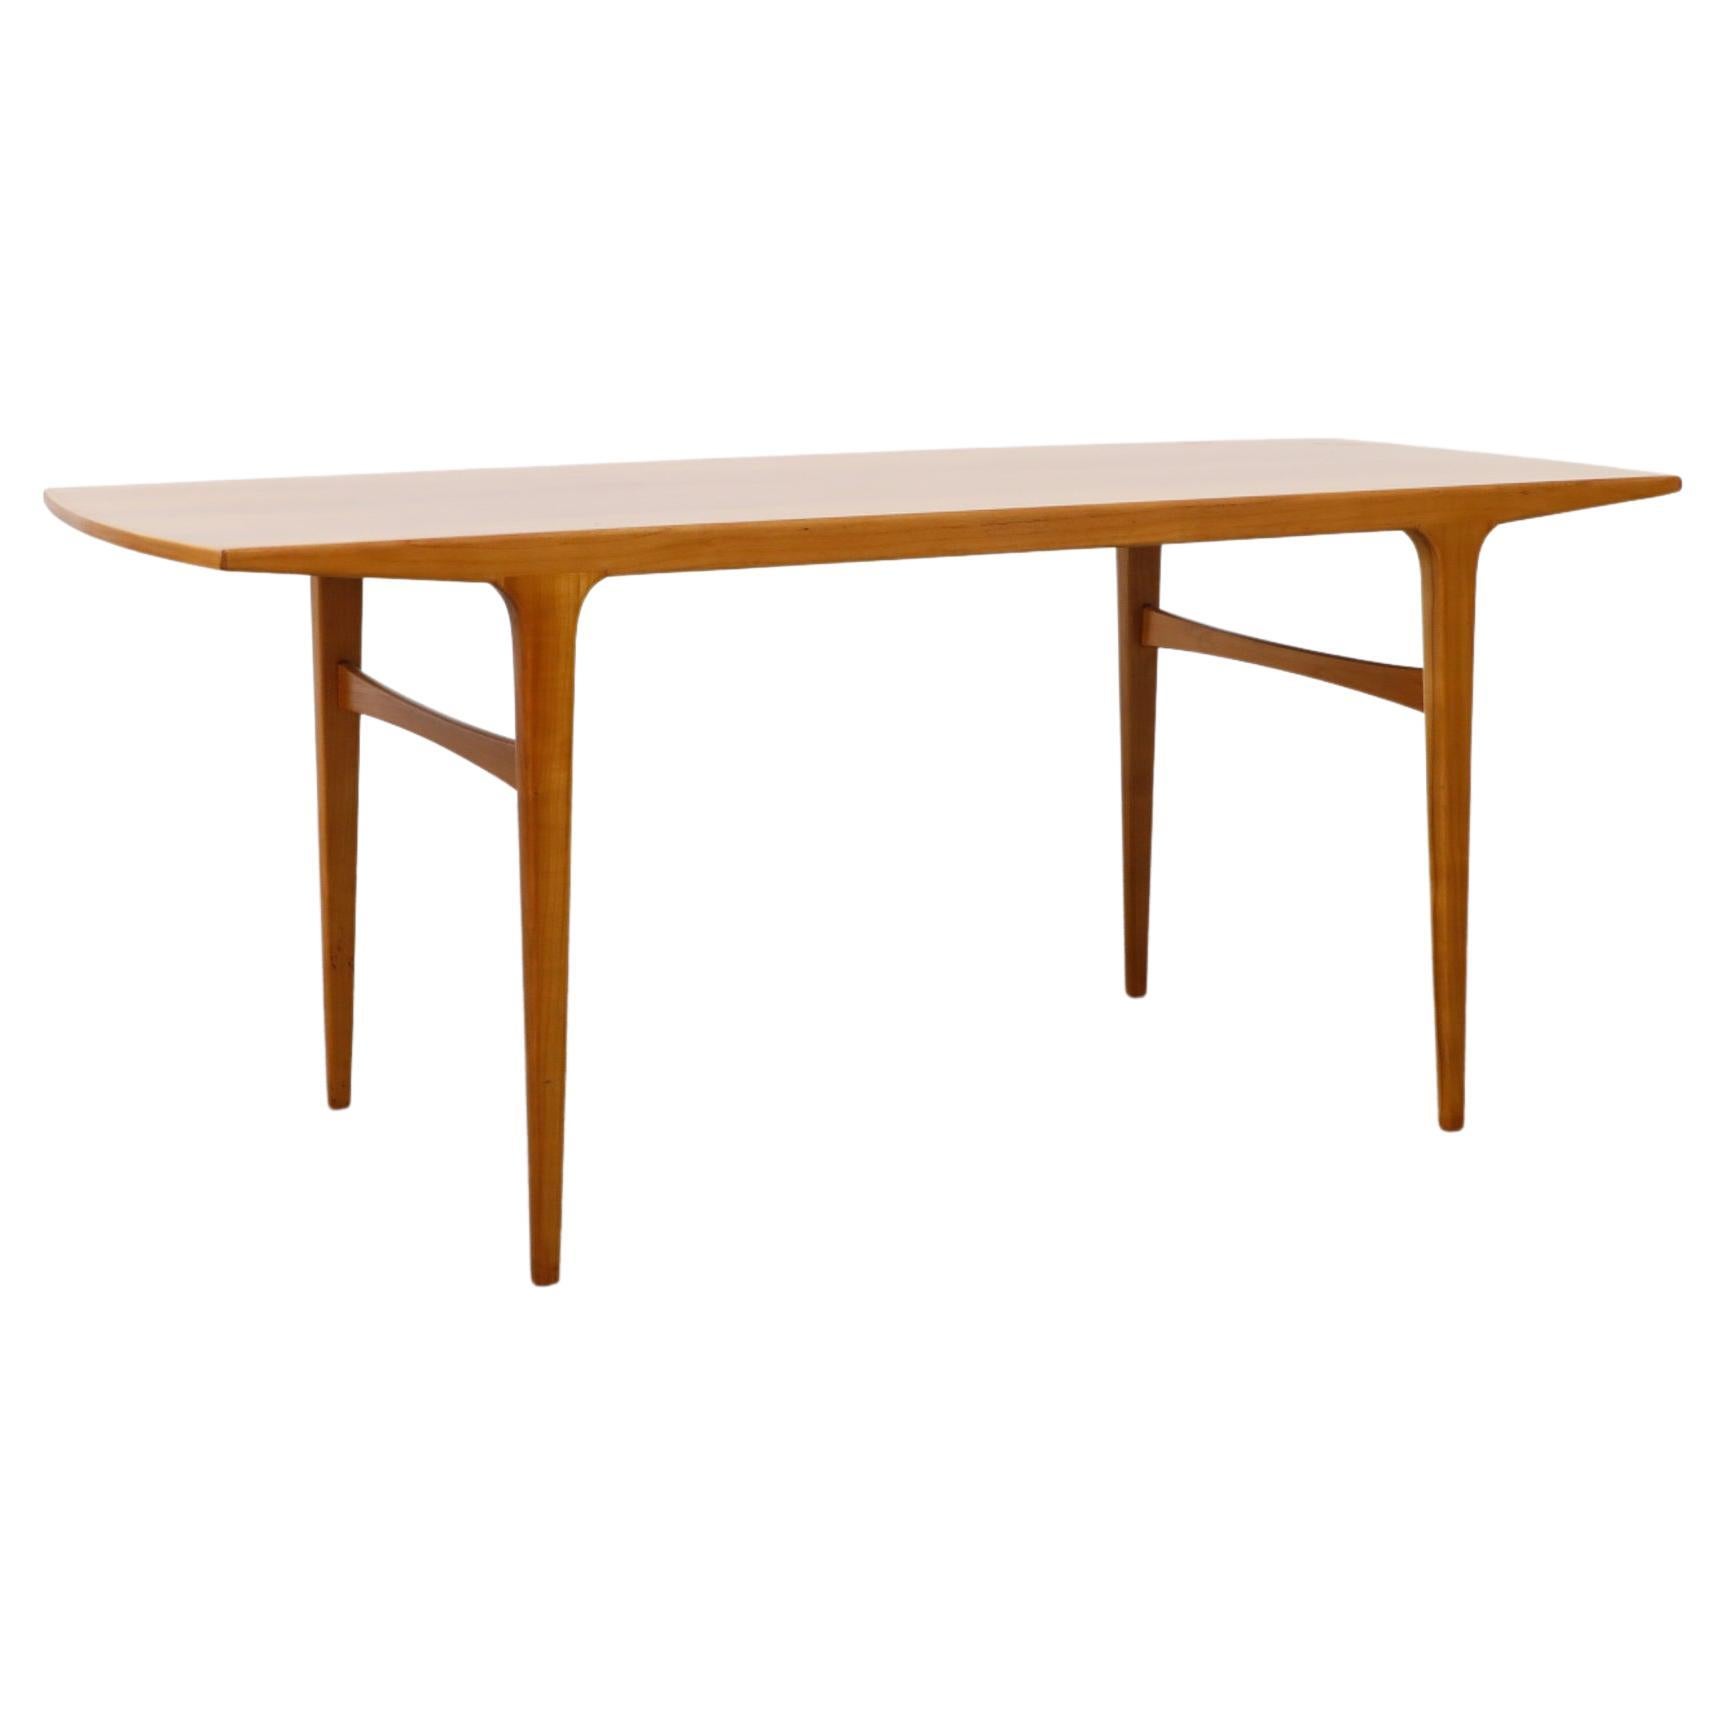 Sleek Danish Mid-Century Johannes Andersen Style Console Table in Pecan Wood